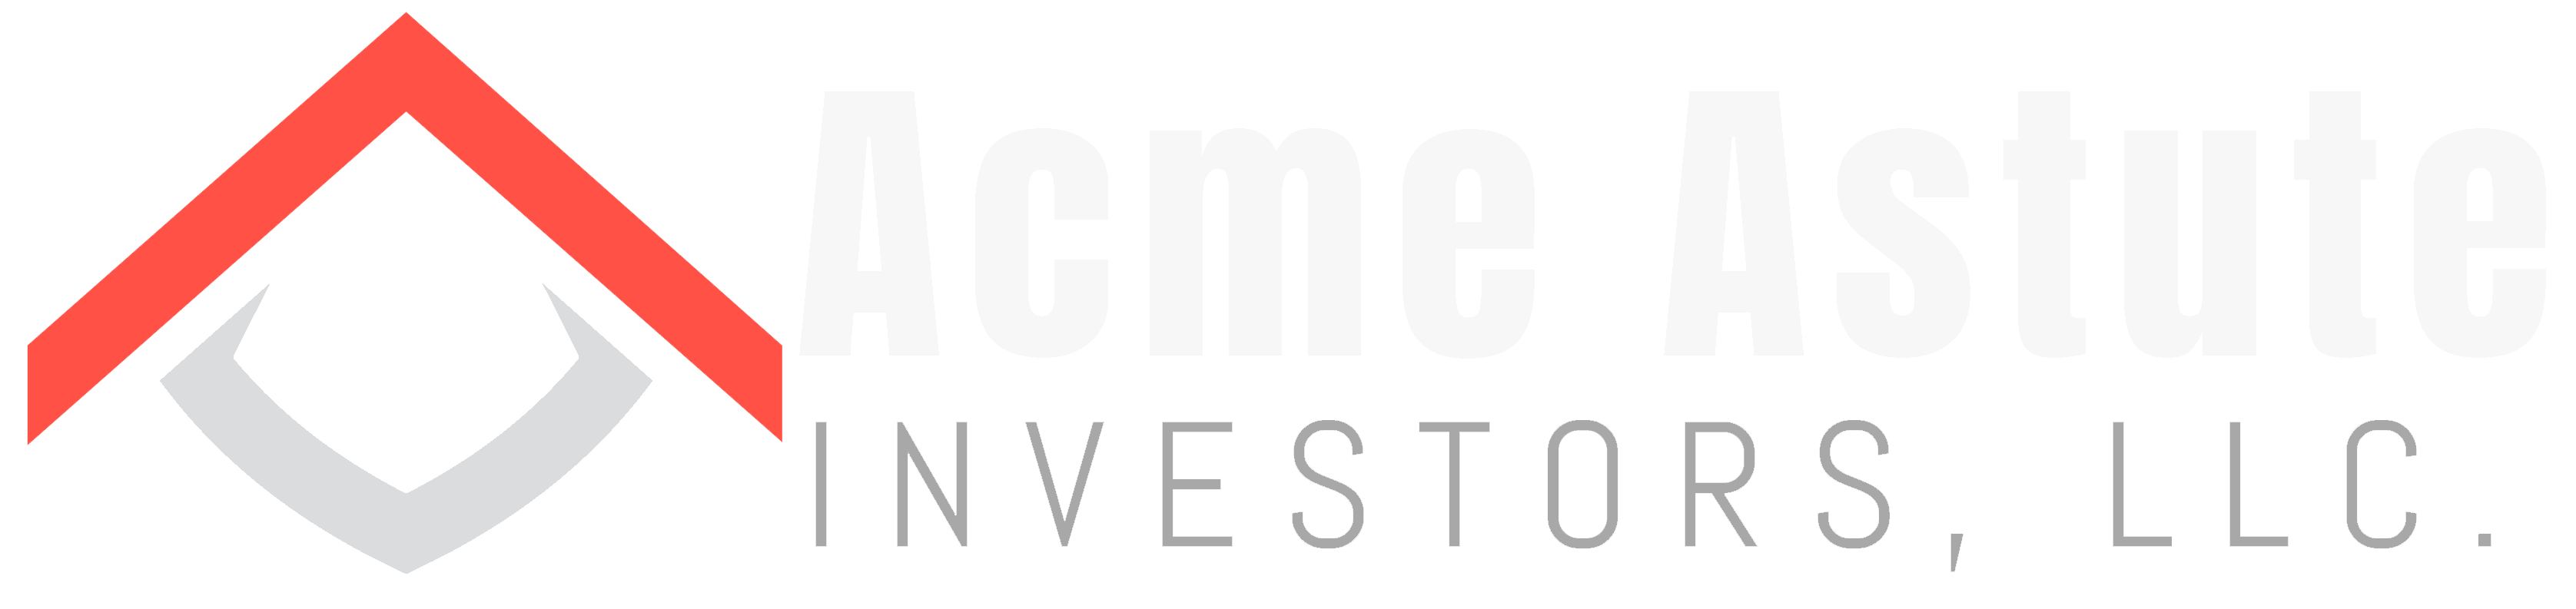 Acme Astute Investors LLCHarvest Great Ideas From Best Assets.